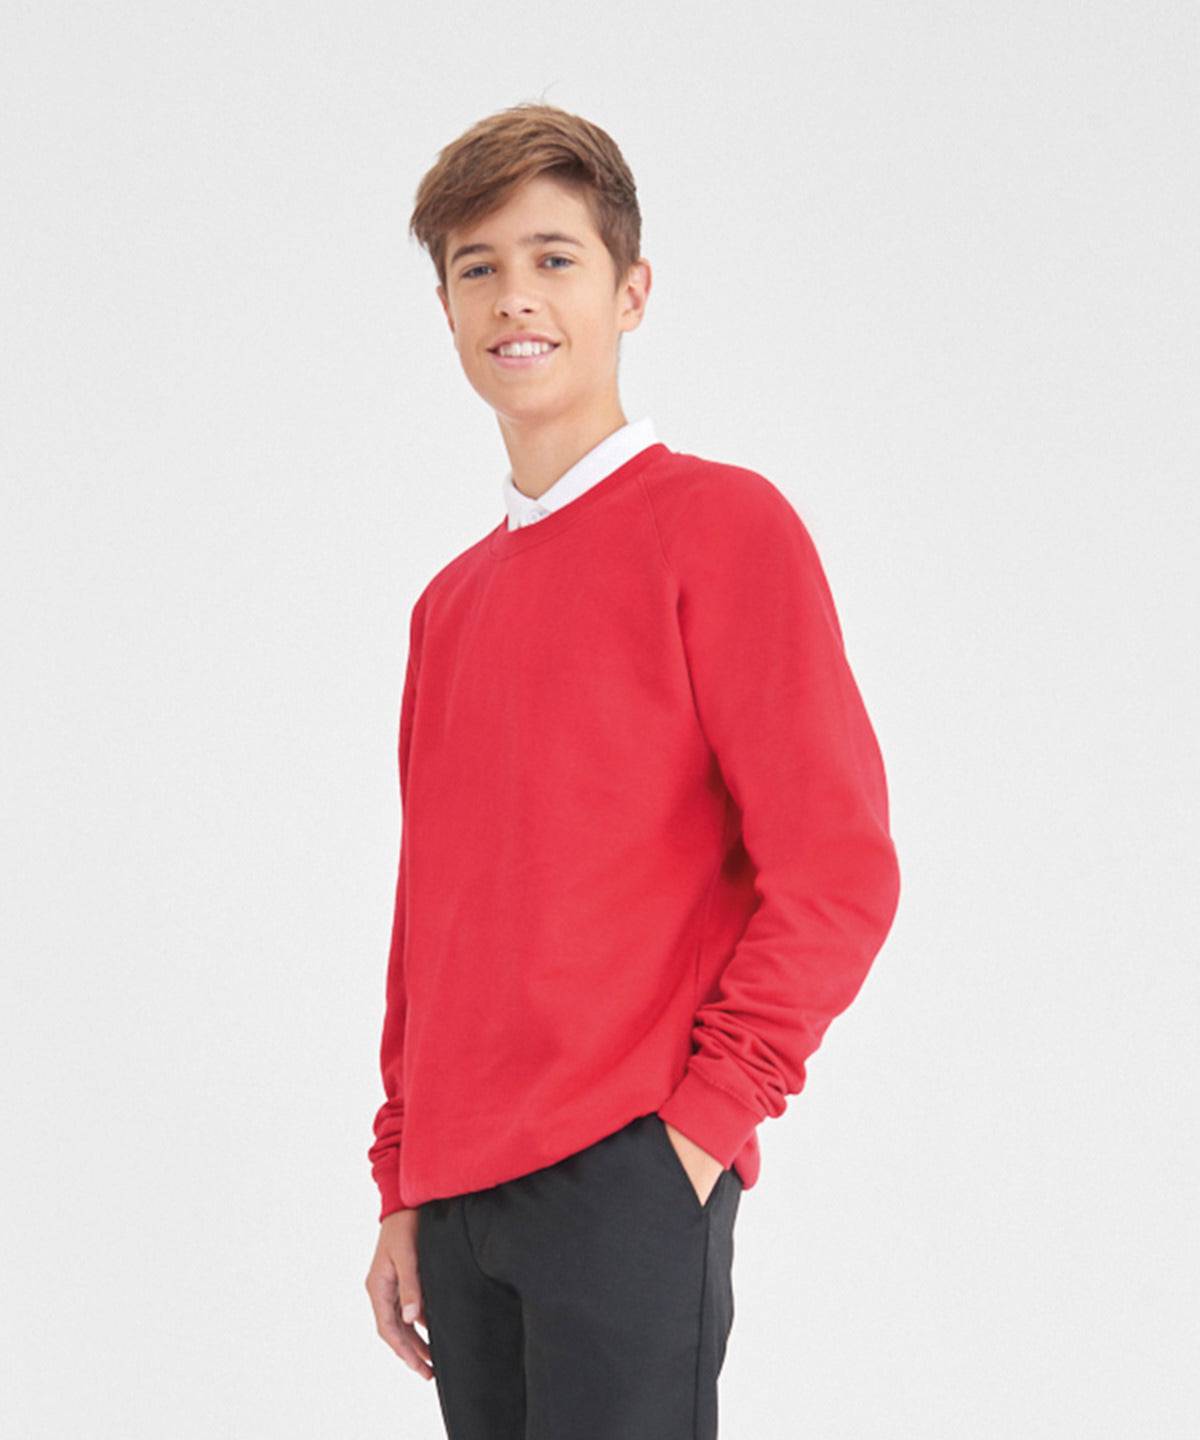 Load image into Gallery viewer, Academy Red - Senior Academy raglan sweatshirt
